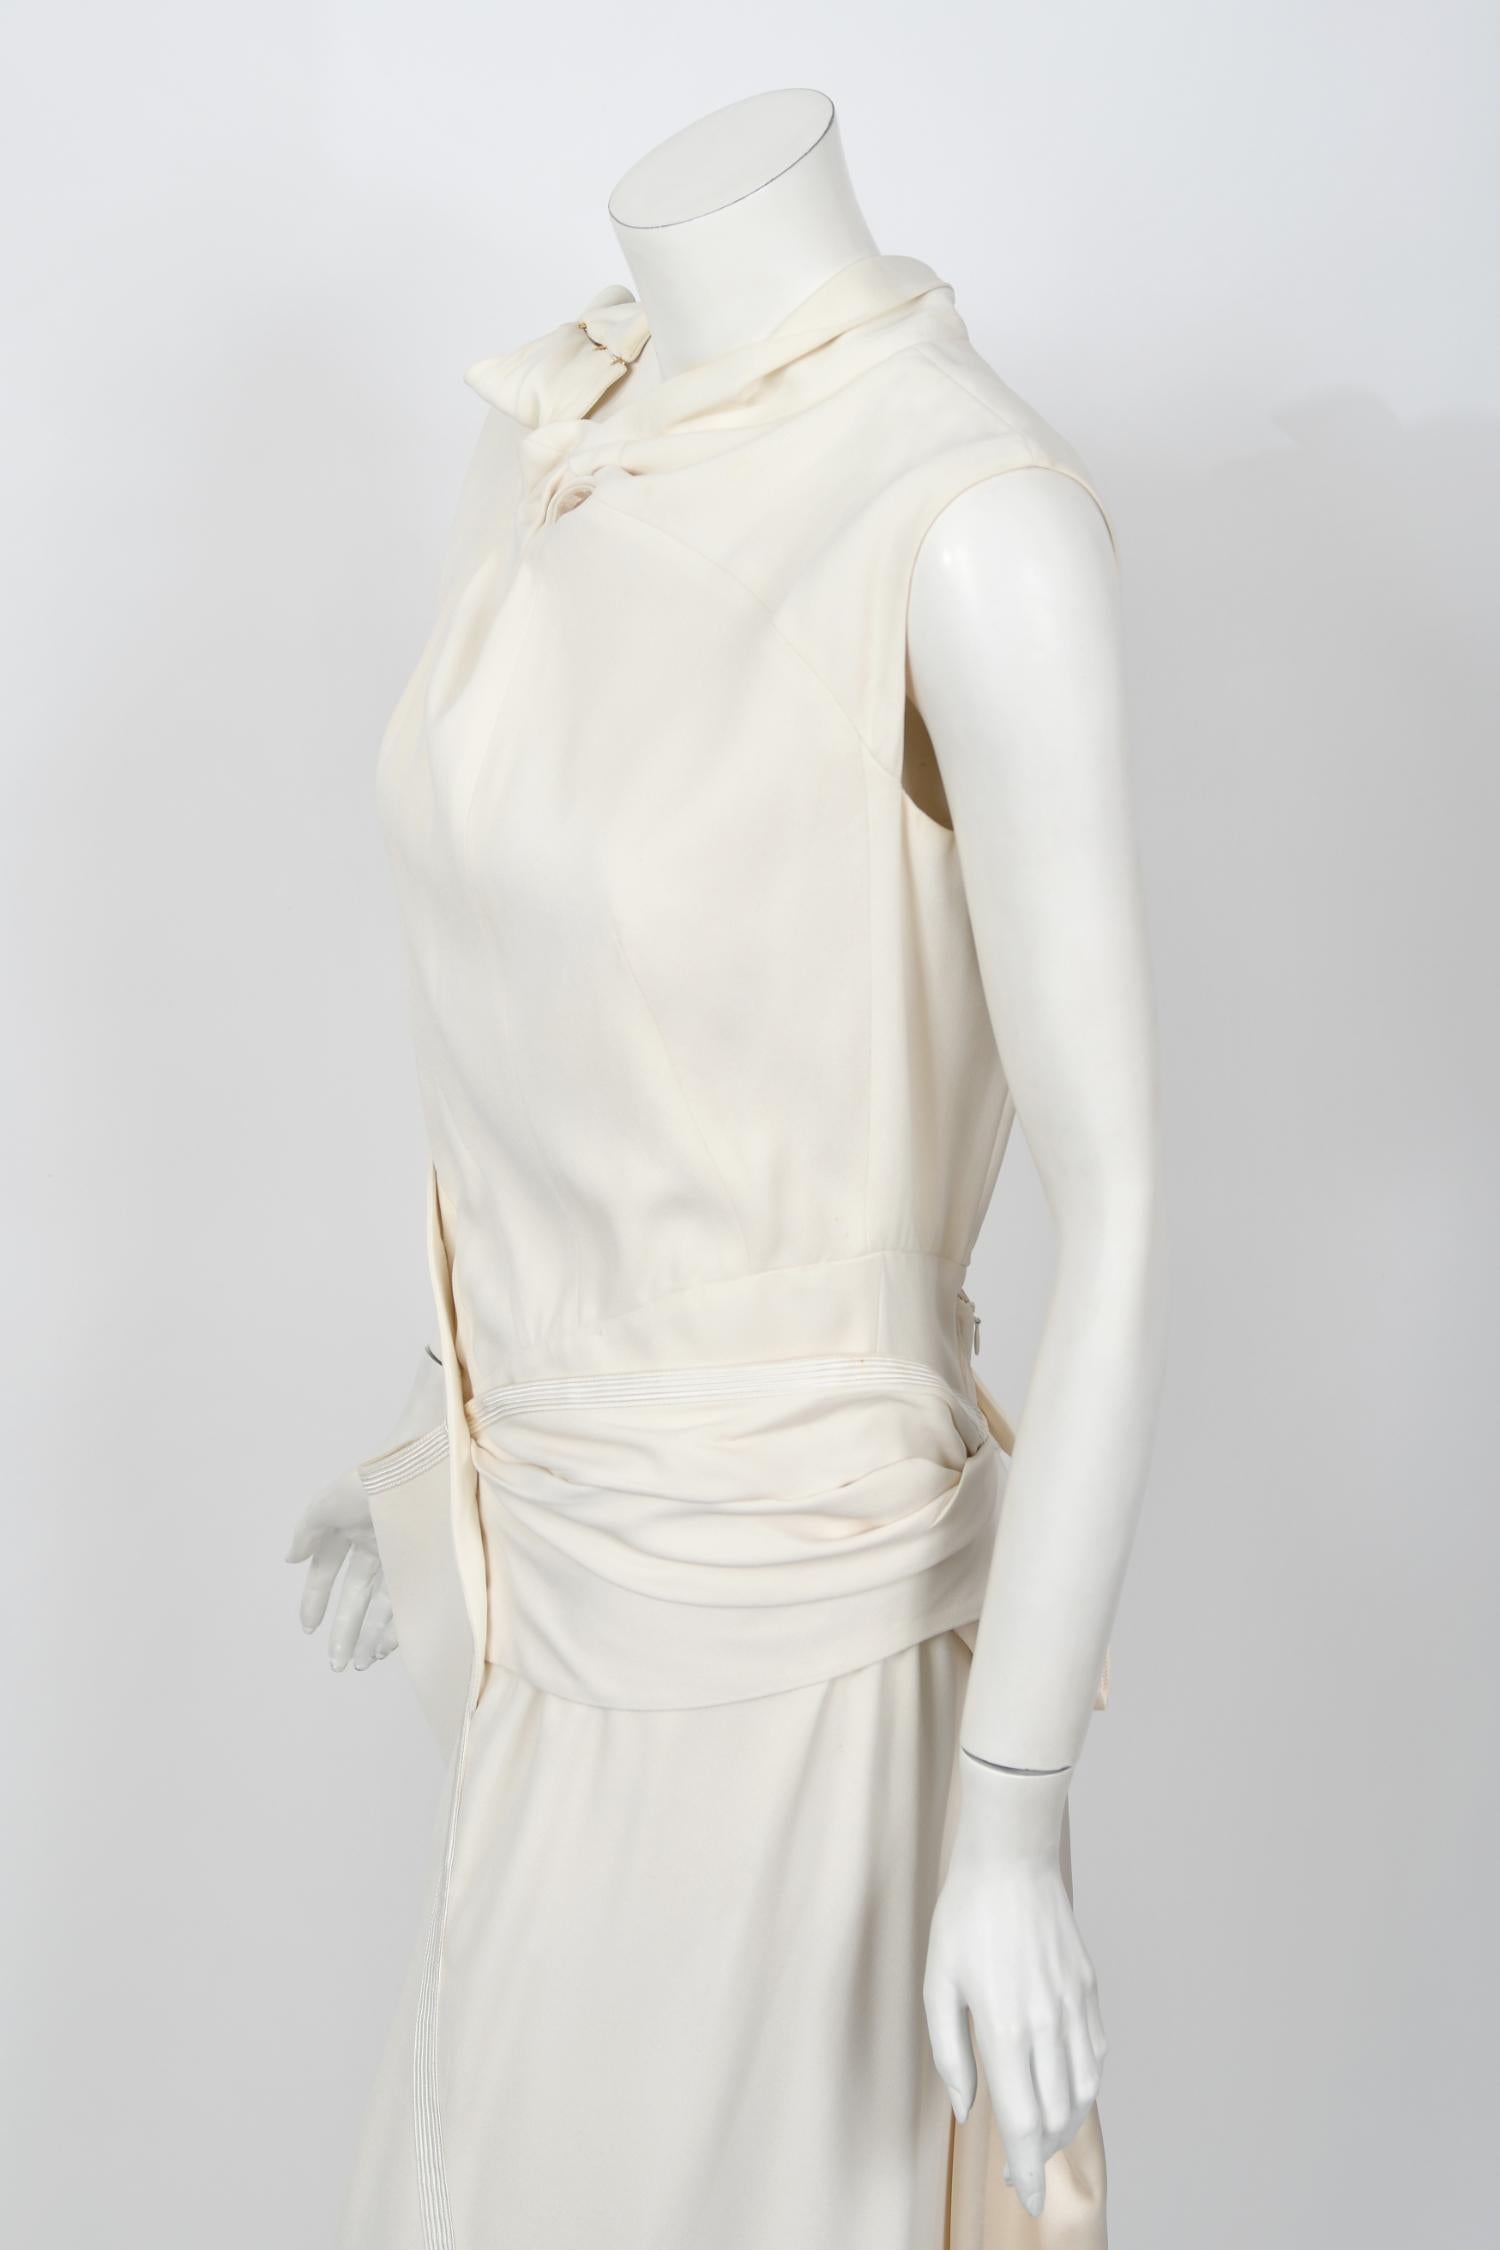 2000 Christian Dior by John Galliano Ivory Crepe Cut-Out Asymmetric Draped Dress 11